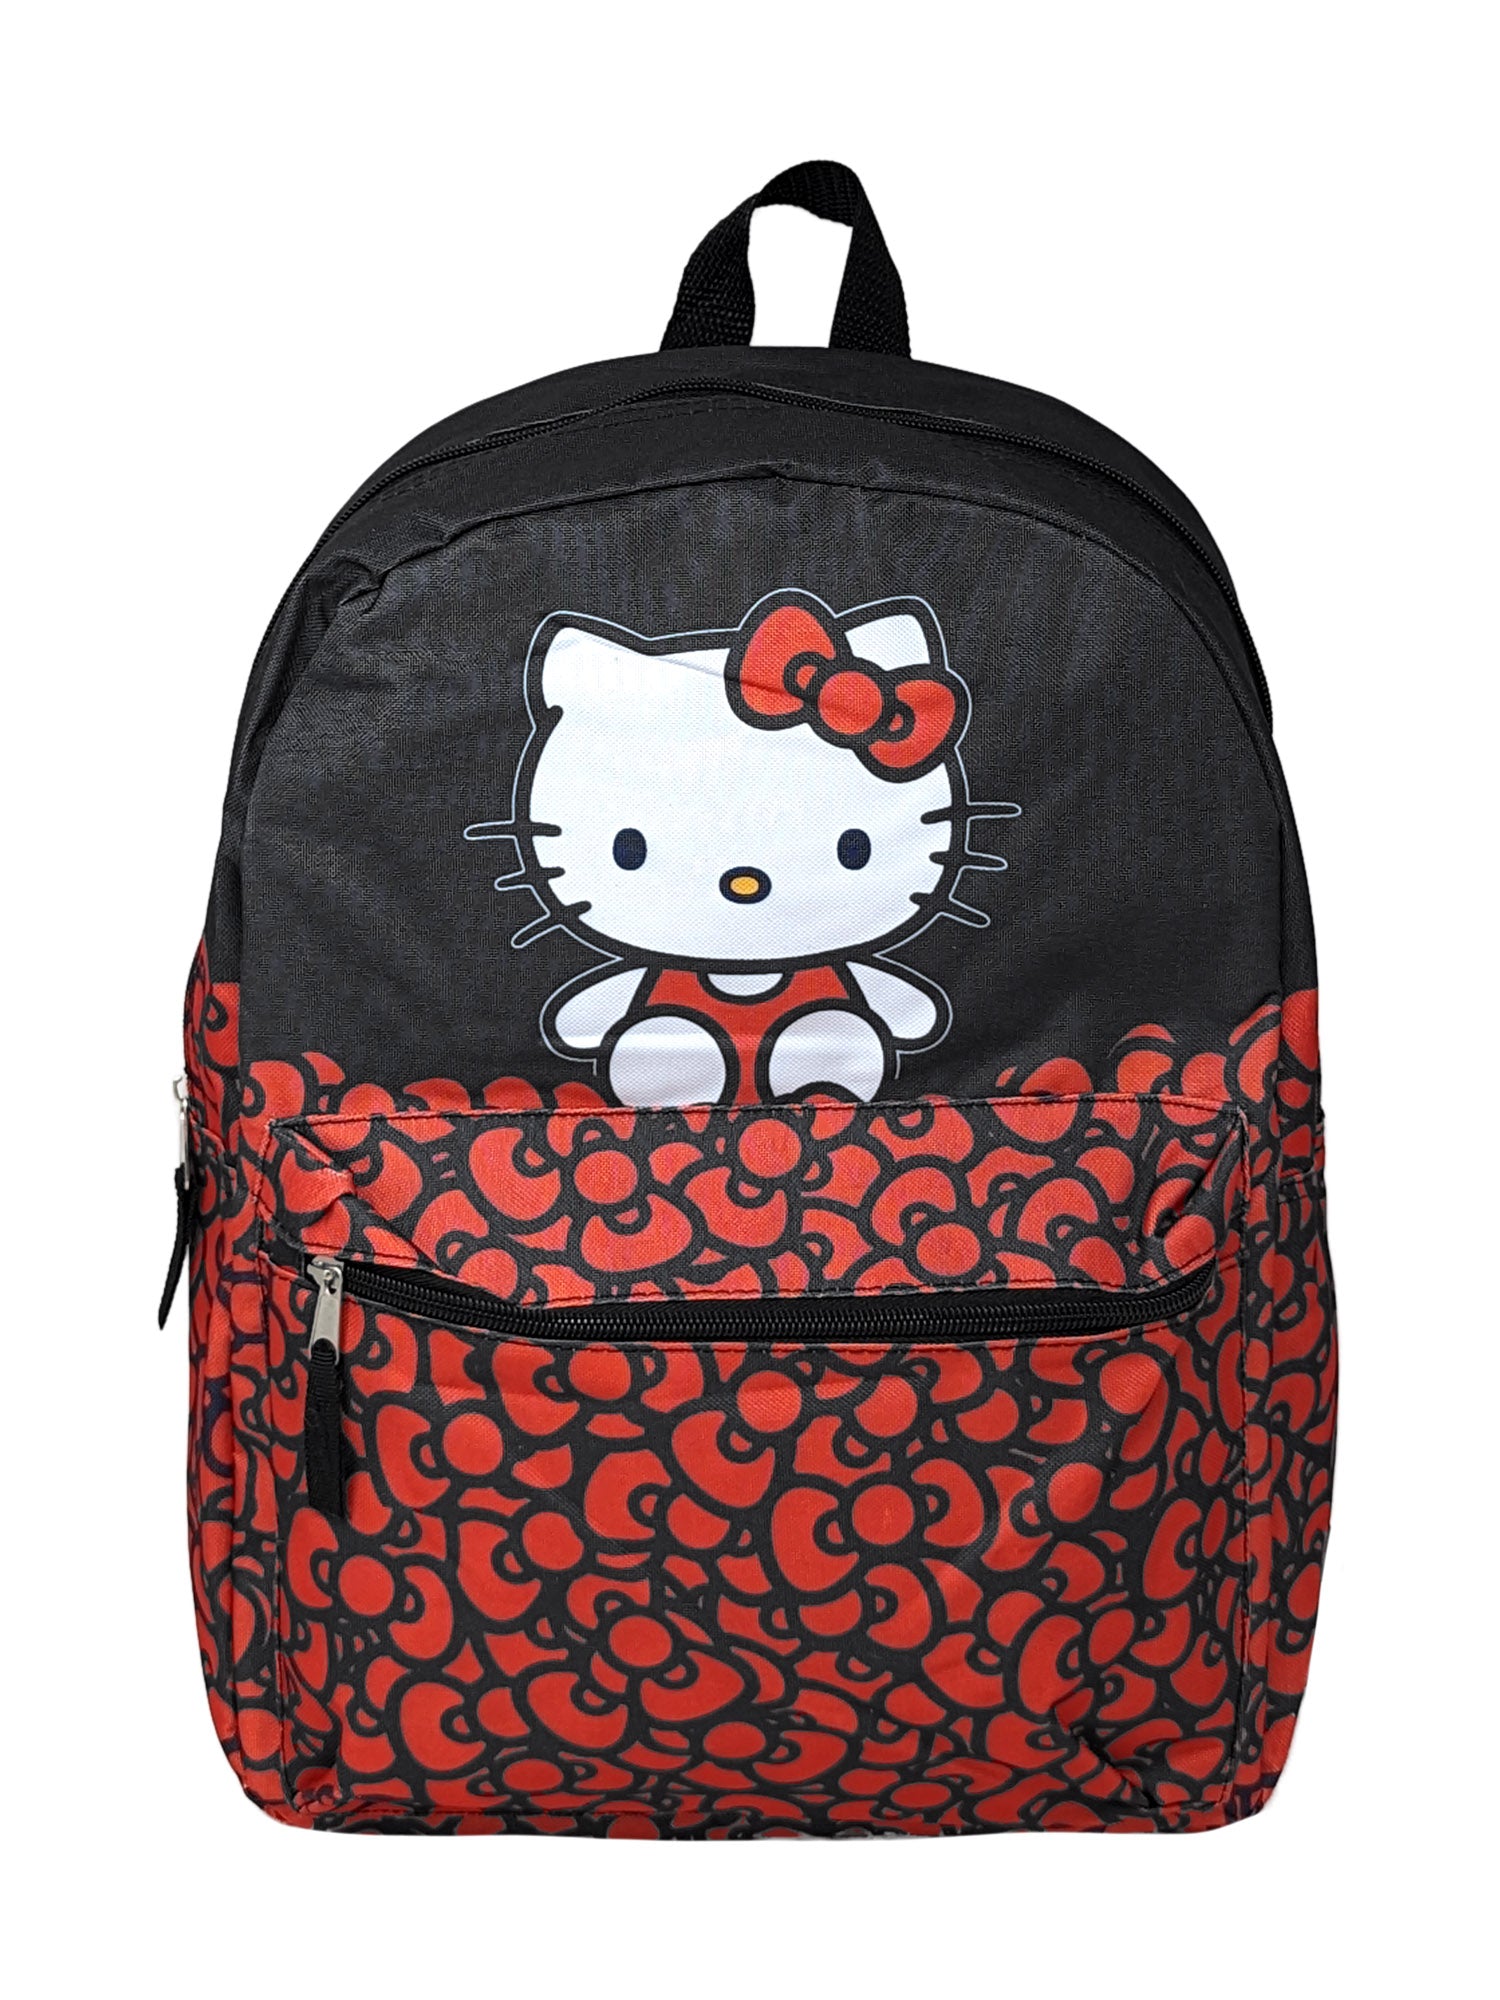 Sanrio Hello Backpack Black & Red w/ Sliding Pencil Case School Set